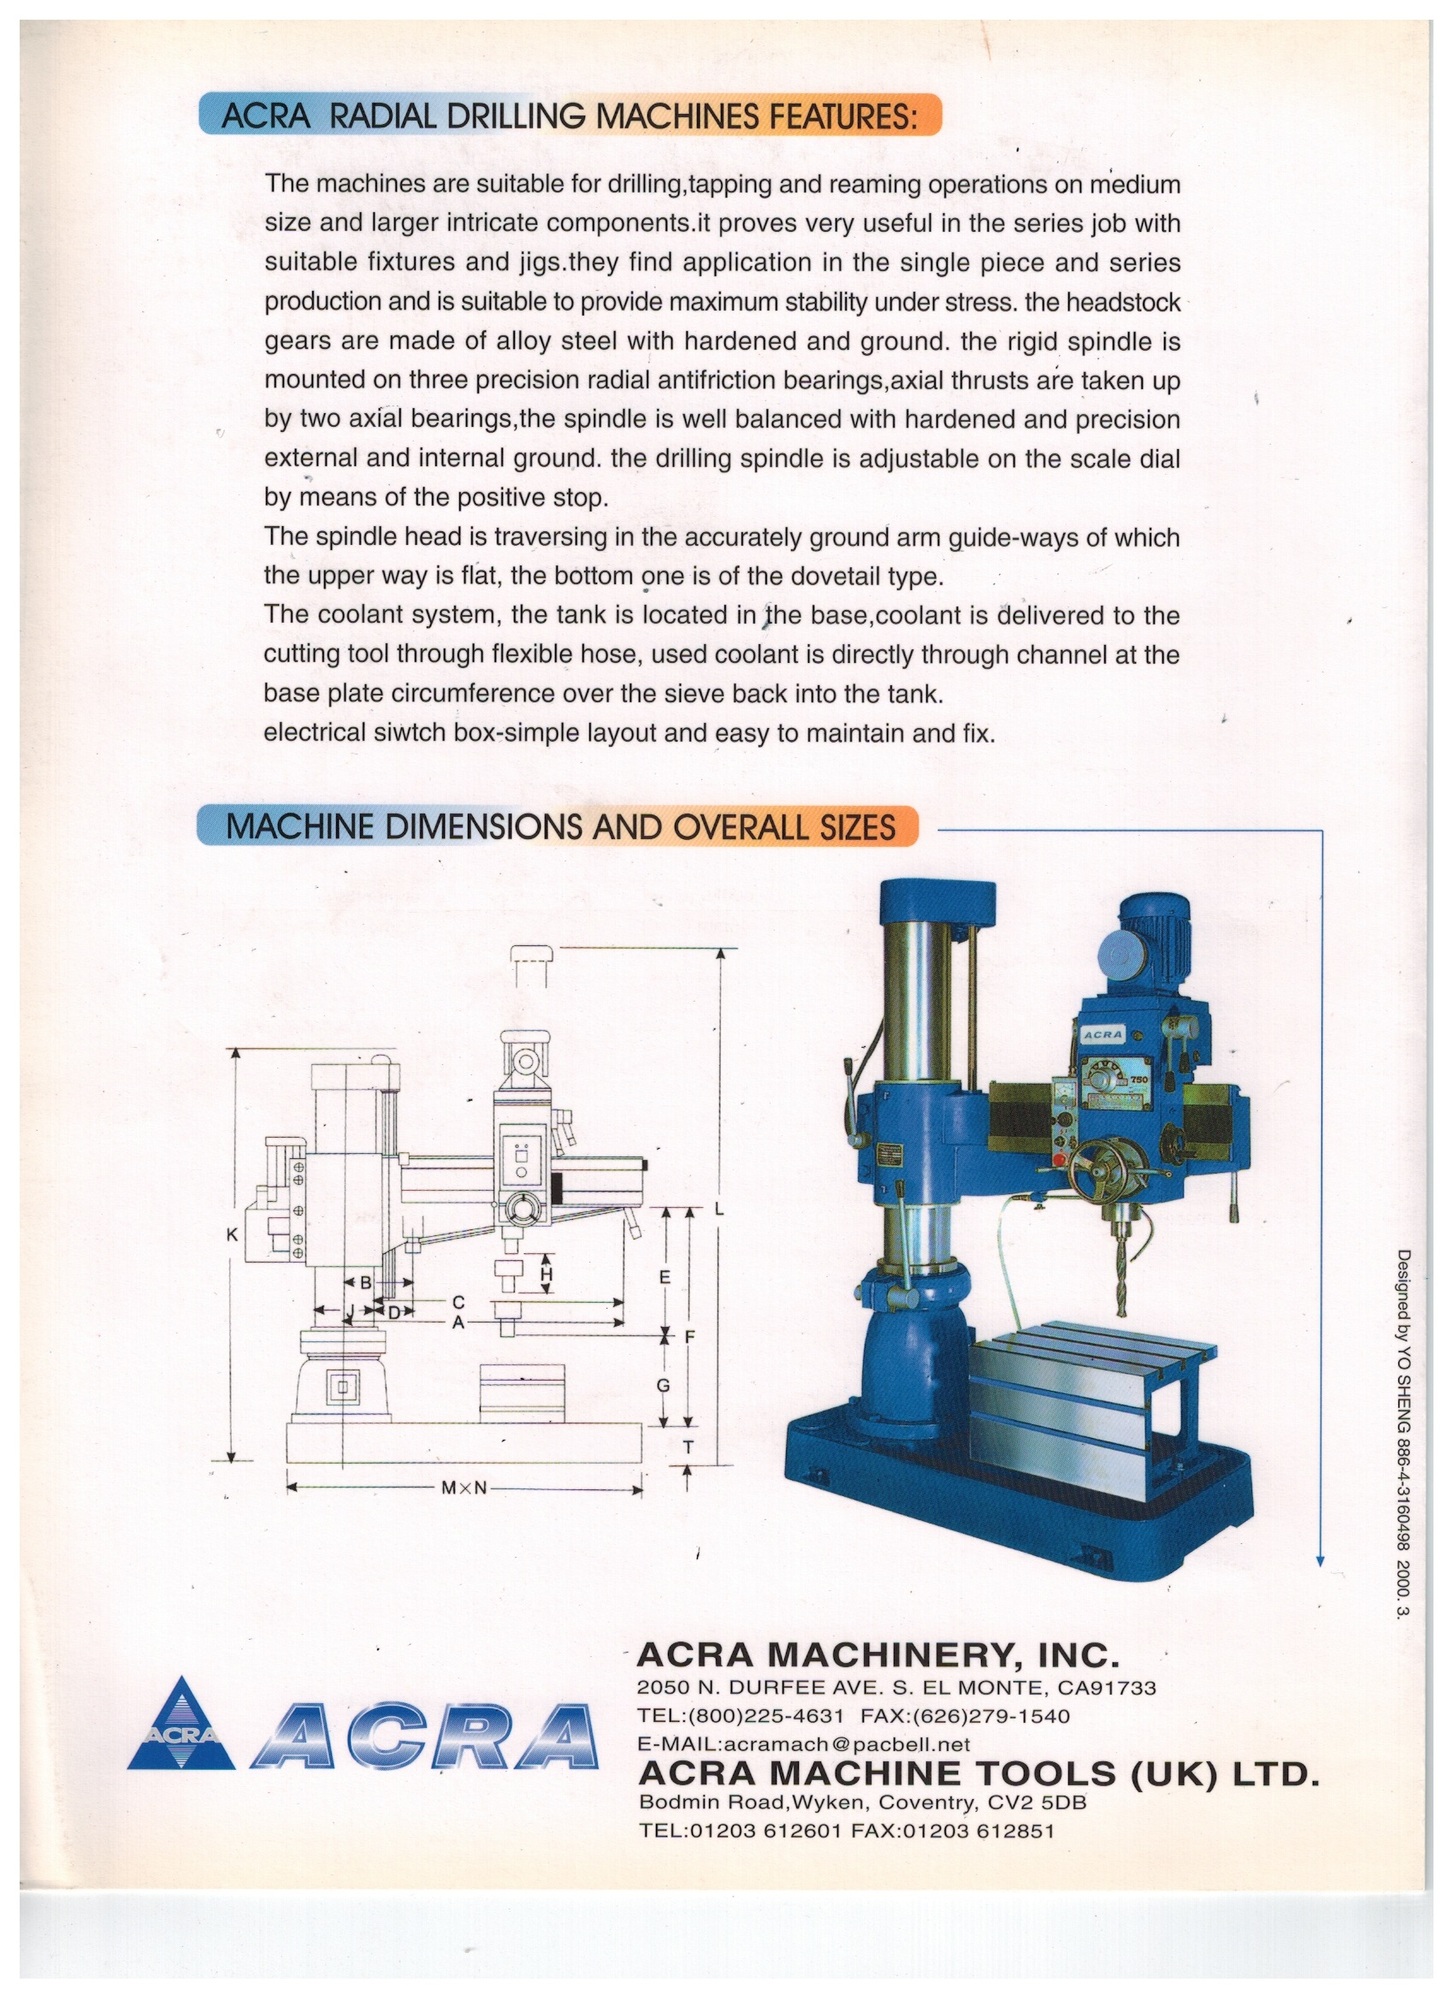 2021 ACRA FRD 900 Radial Drills | Blackout Equipment, LLC